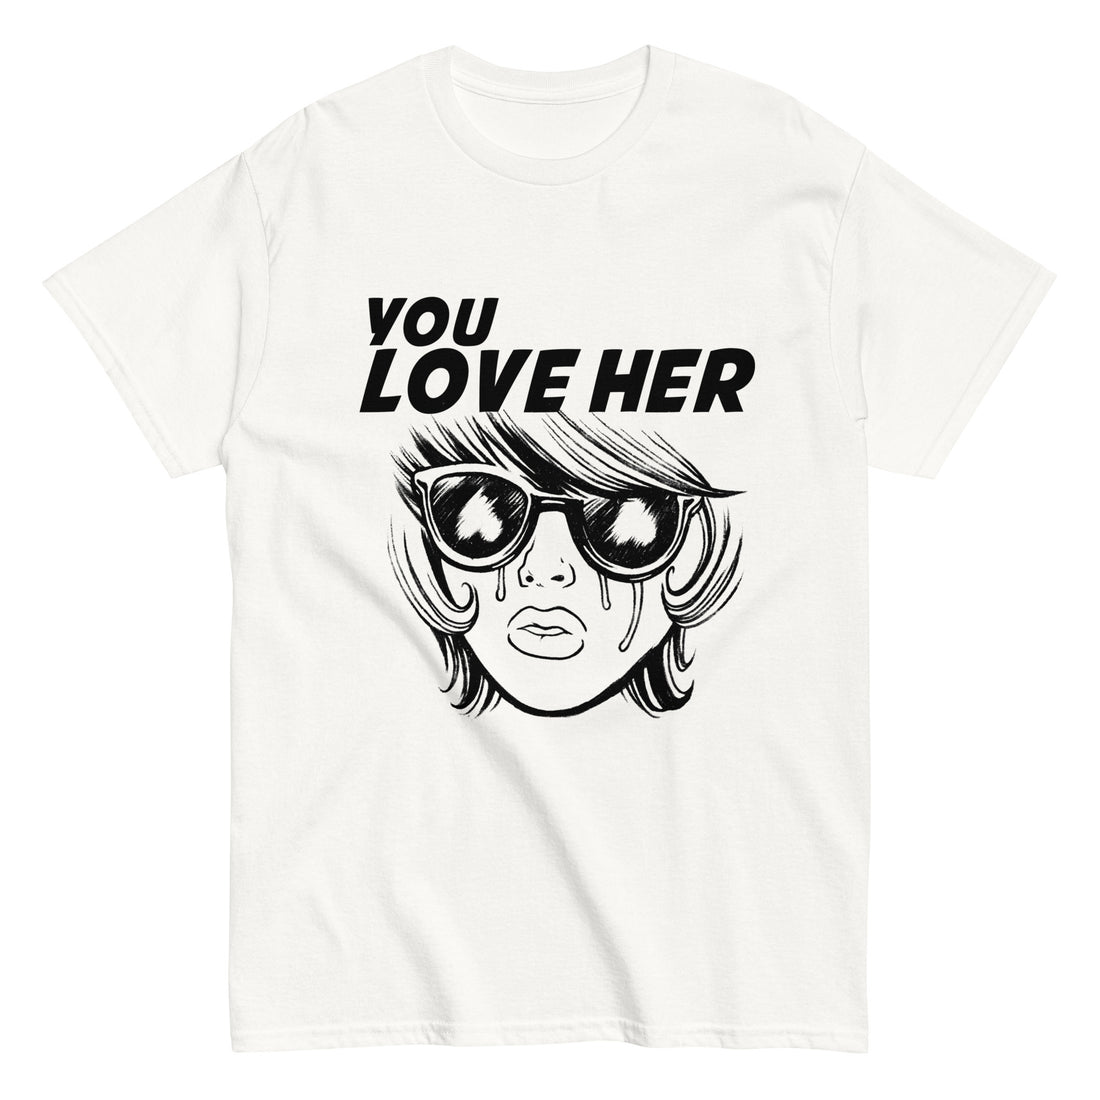 YOU LOVE HER - Pop Art Tee - YOU LOVE HER